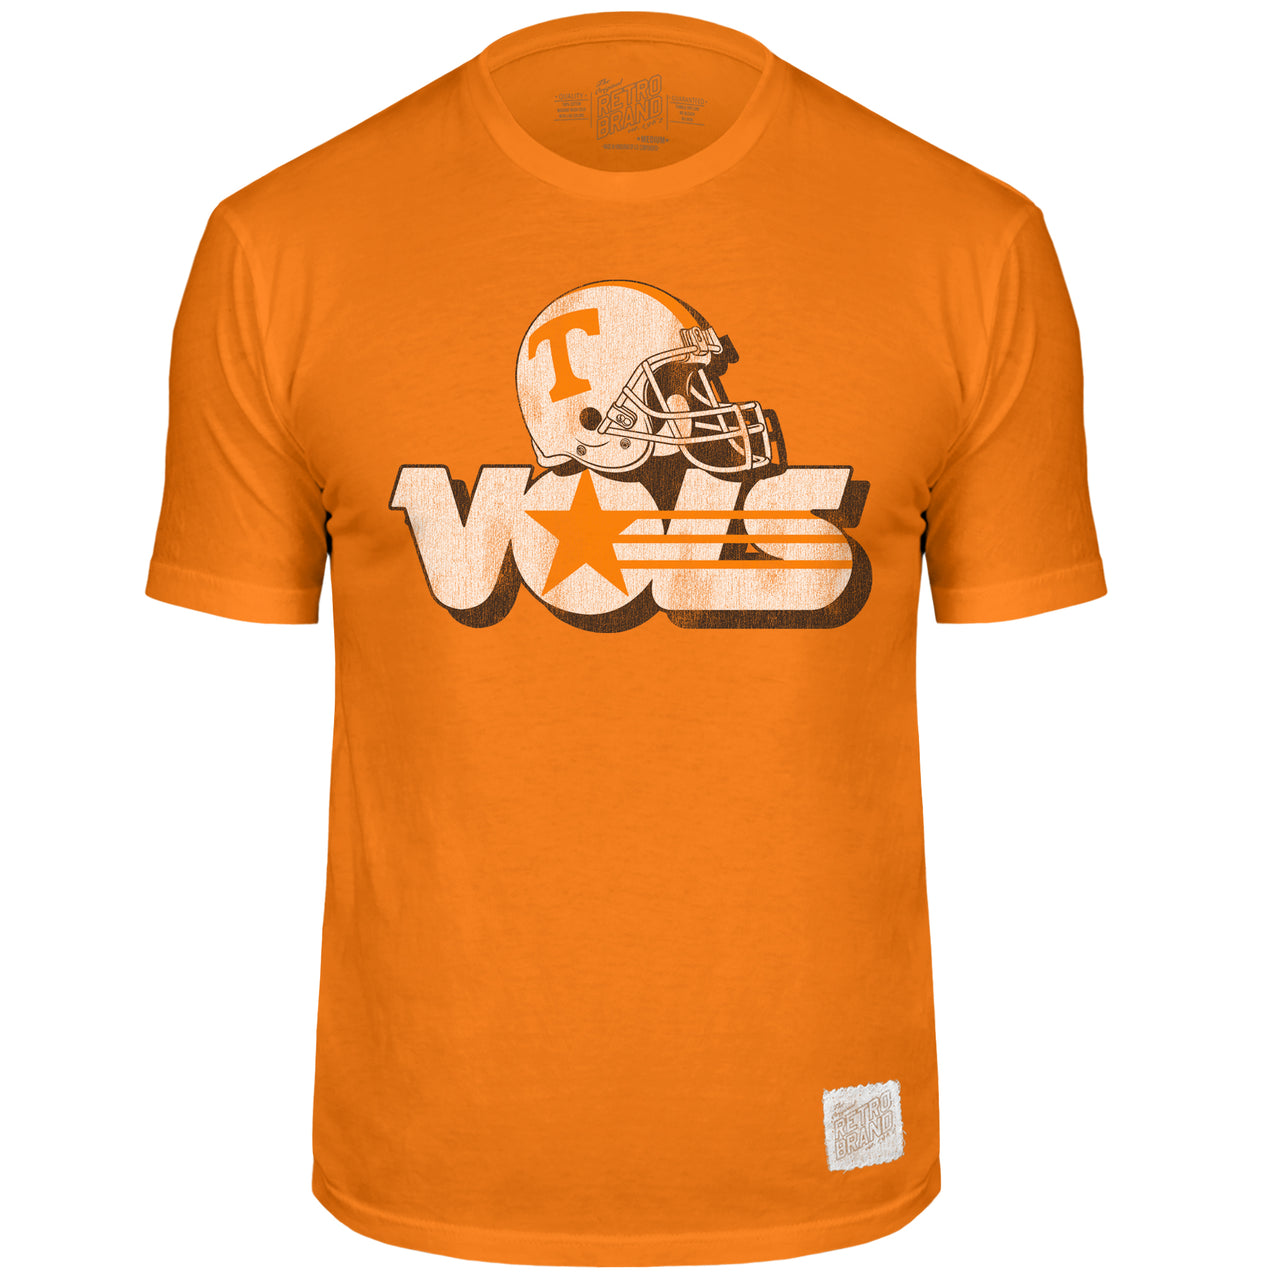 Tennessee Volunteers Helmet "Star Vols" Vintage Tshirt - Orange